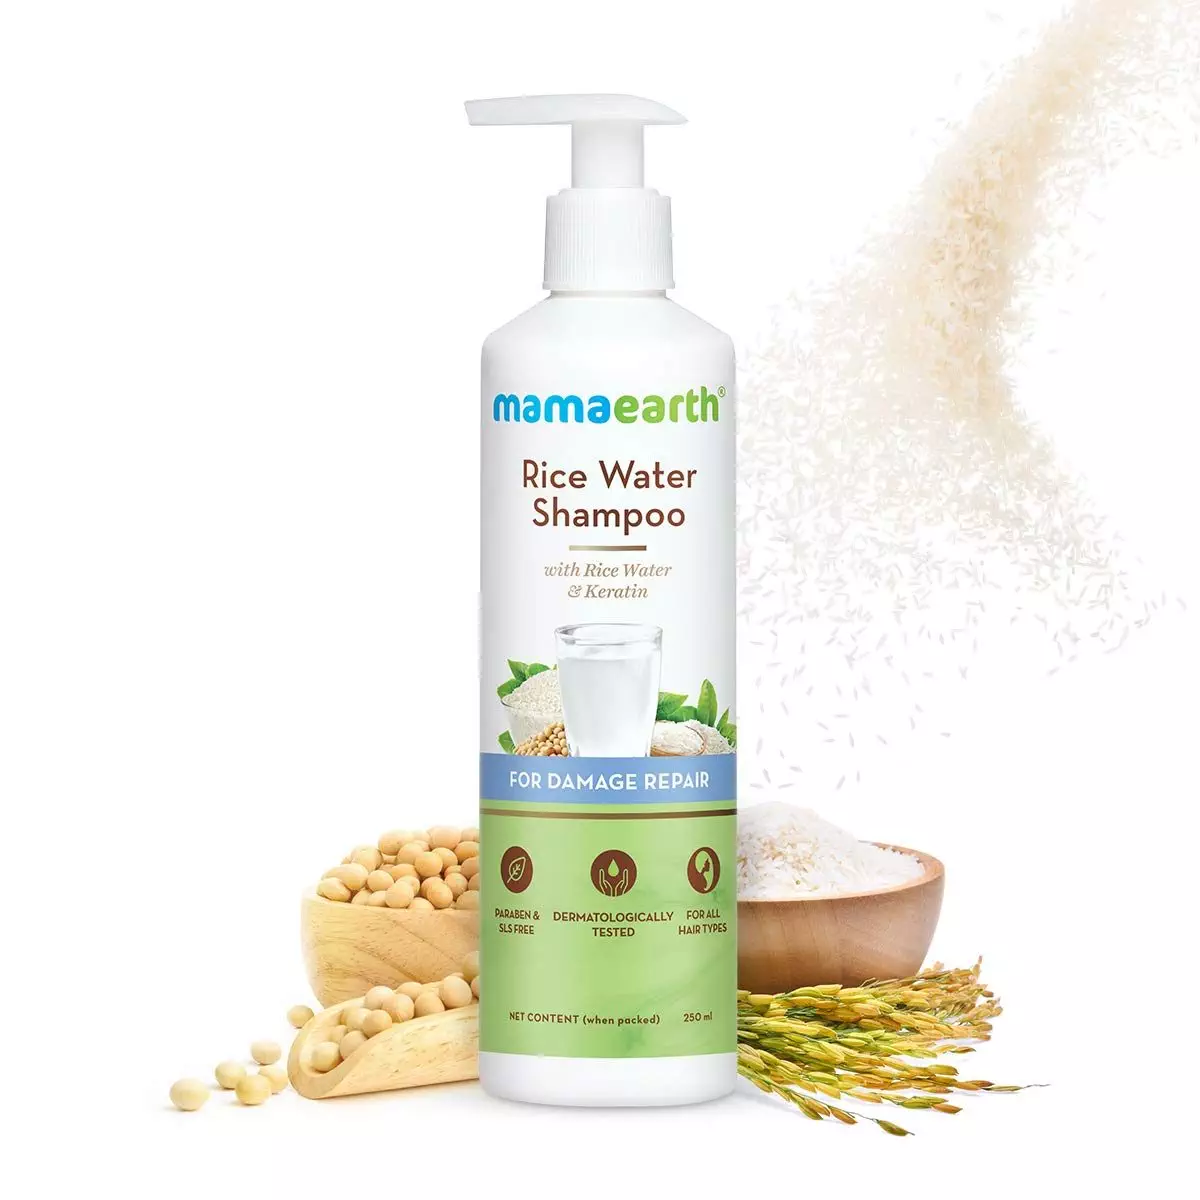 Mamaearth Rice Water Shampoo Review 11